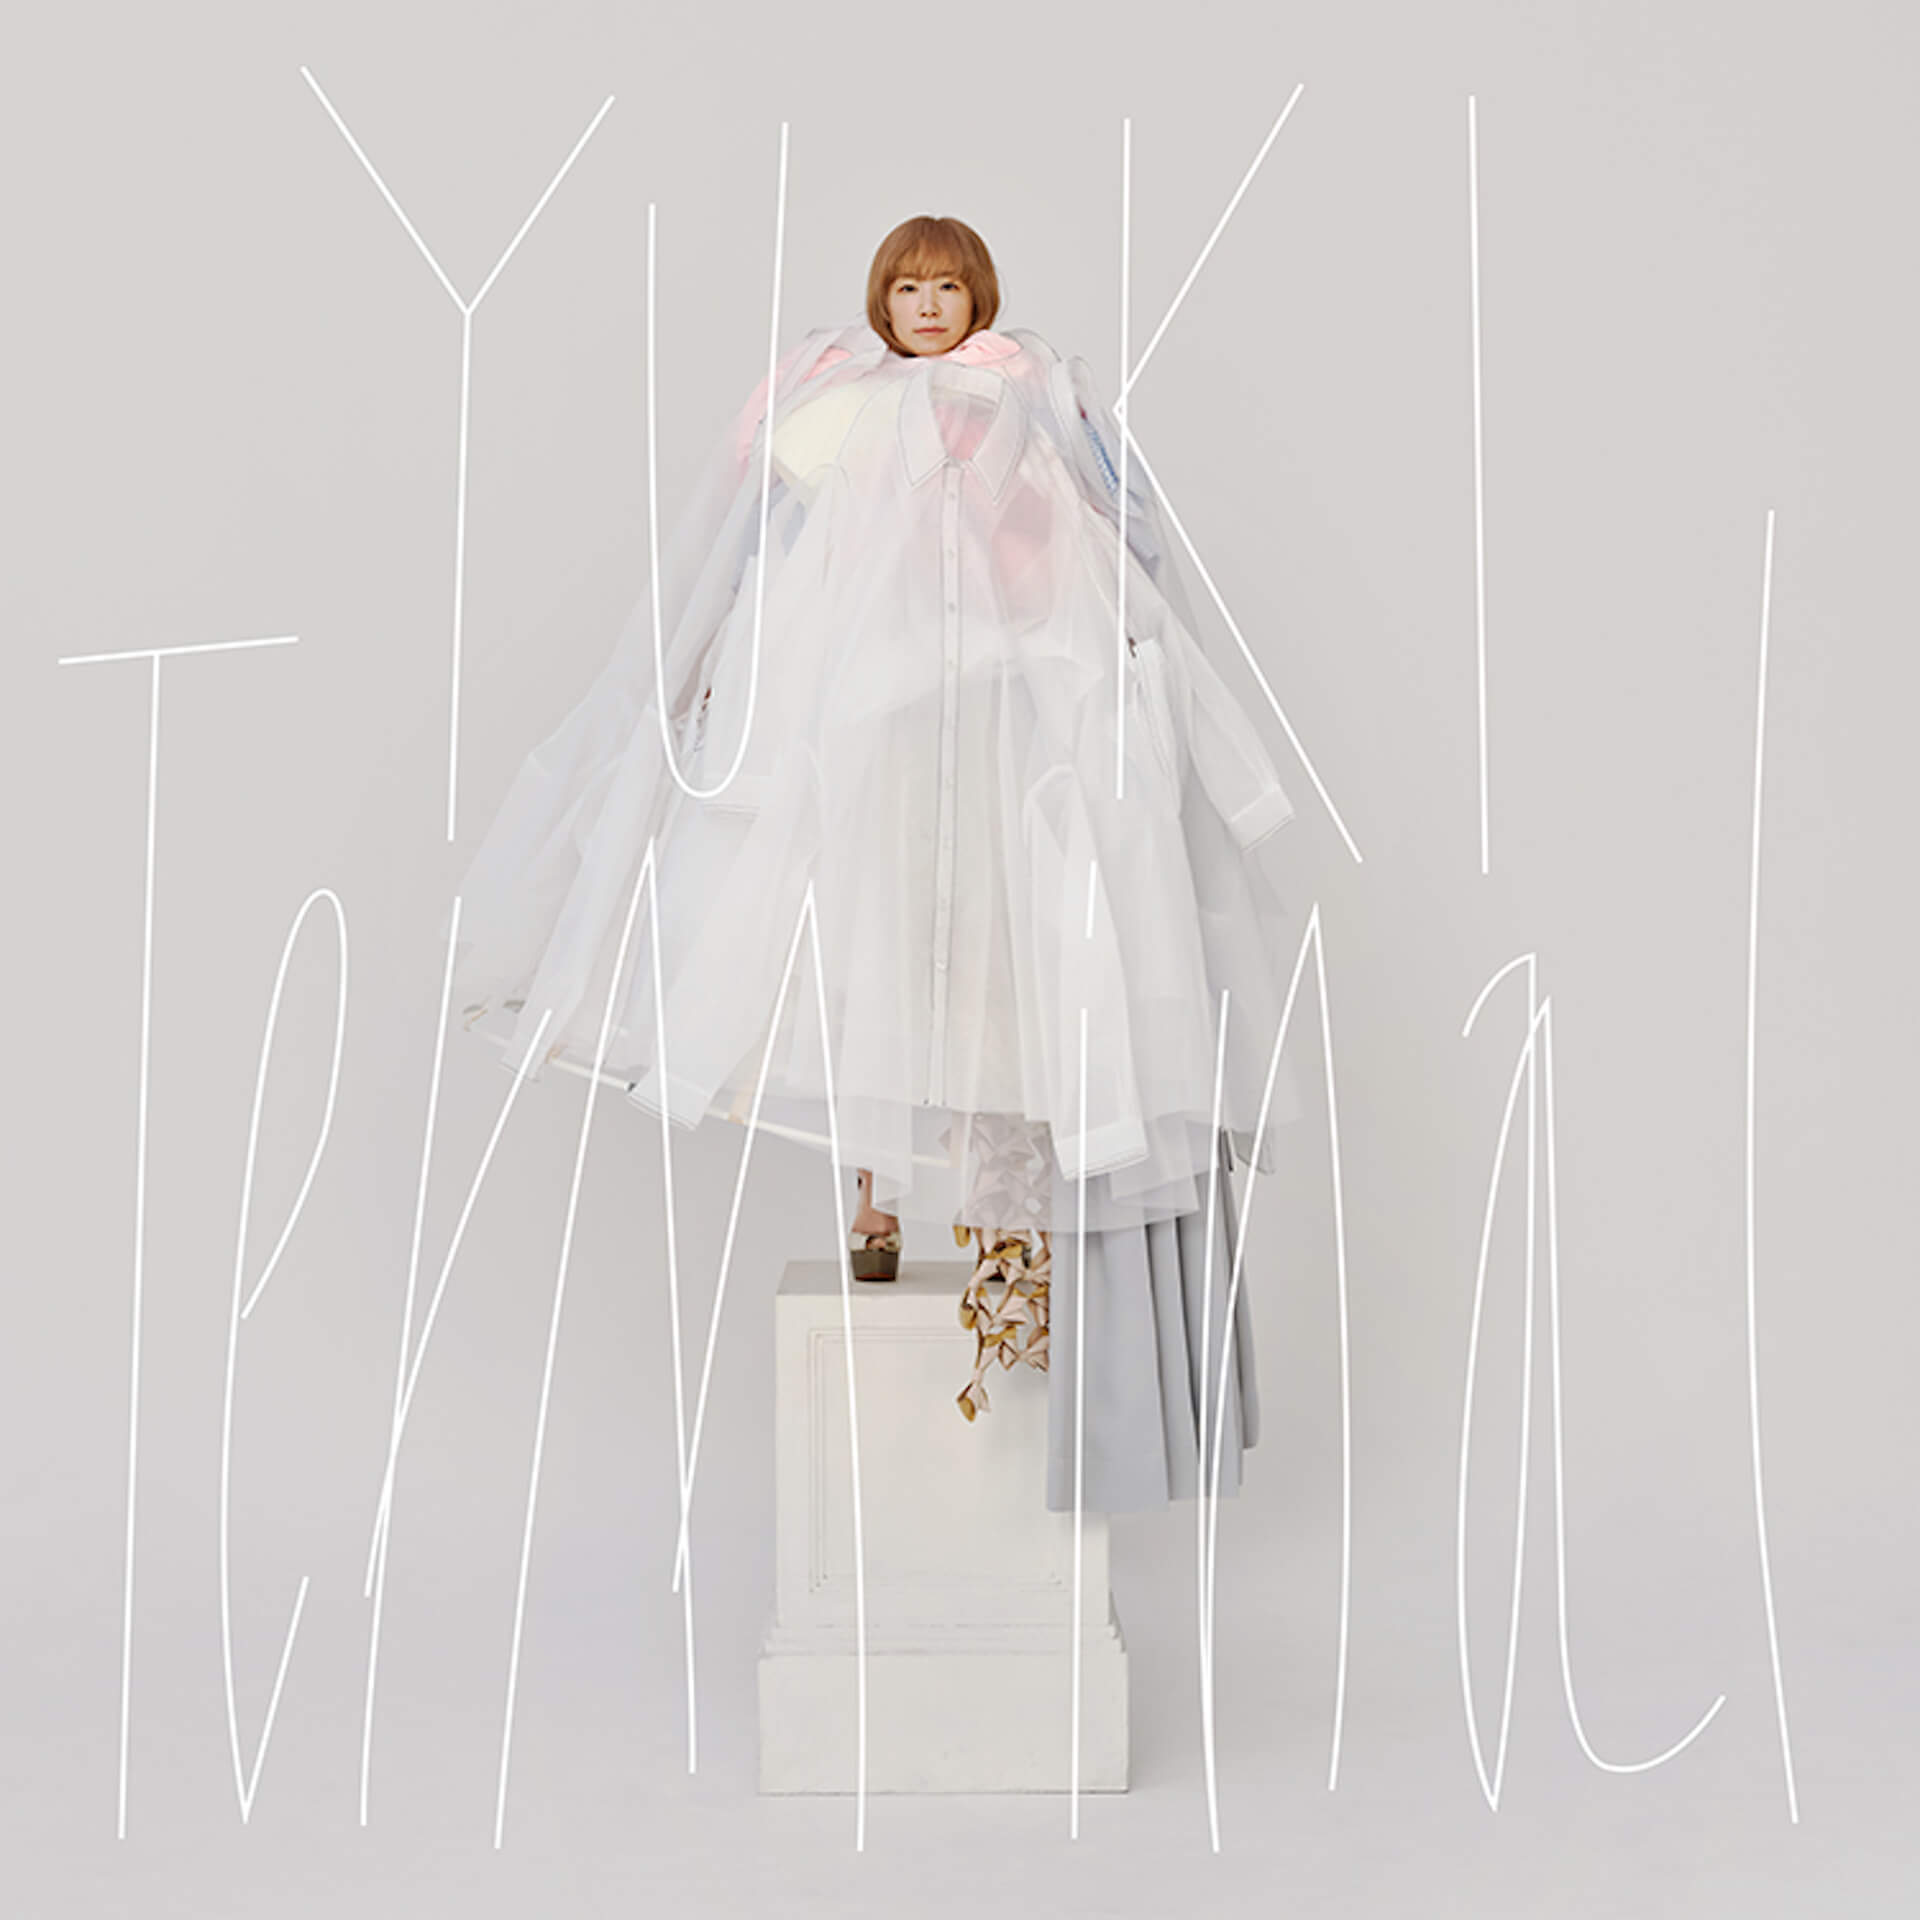 YUKIのニューアルバム『Terminal』のティザー映像が解禁！全13曲のダイジェスト試聴可能 music210421_yuki_5